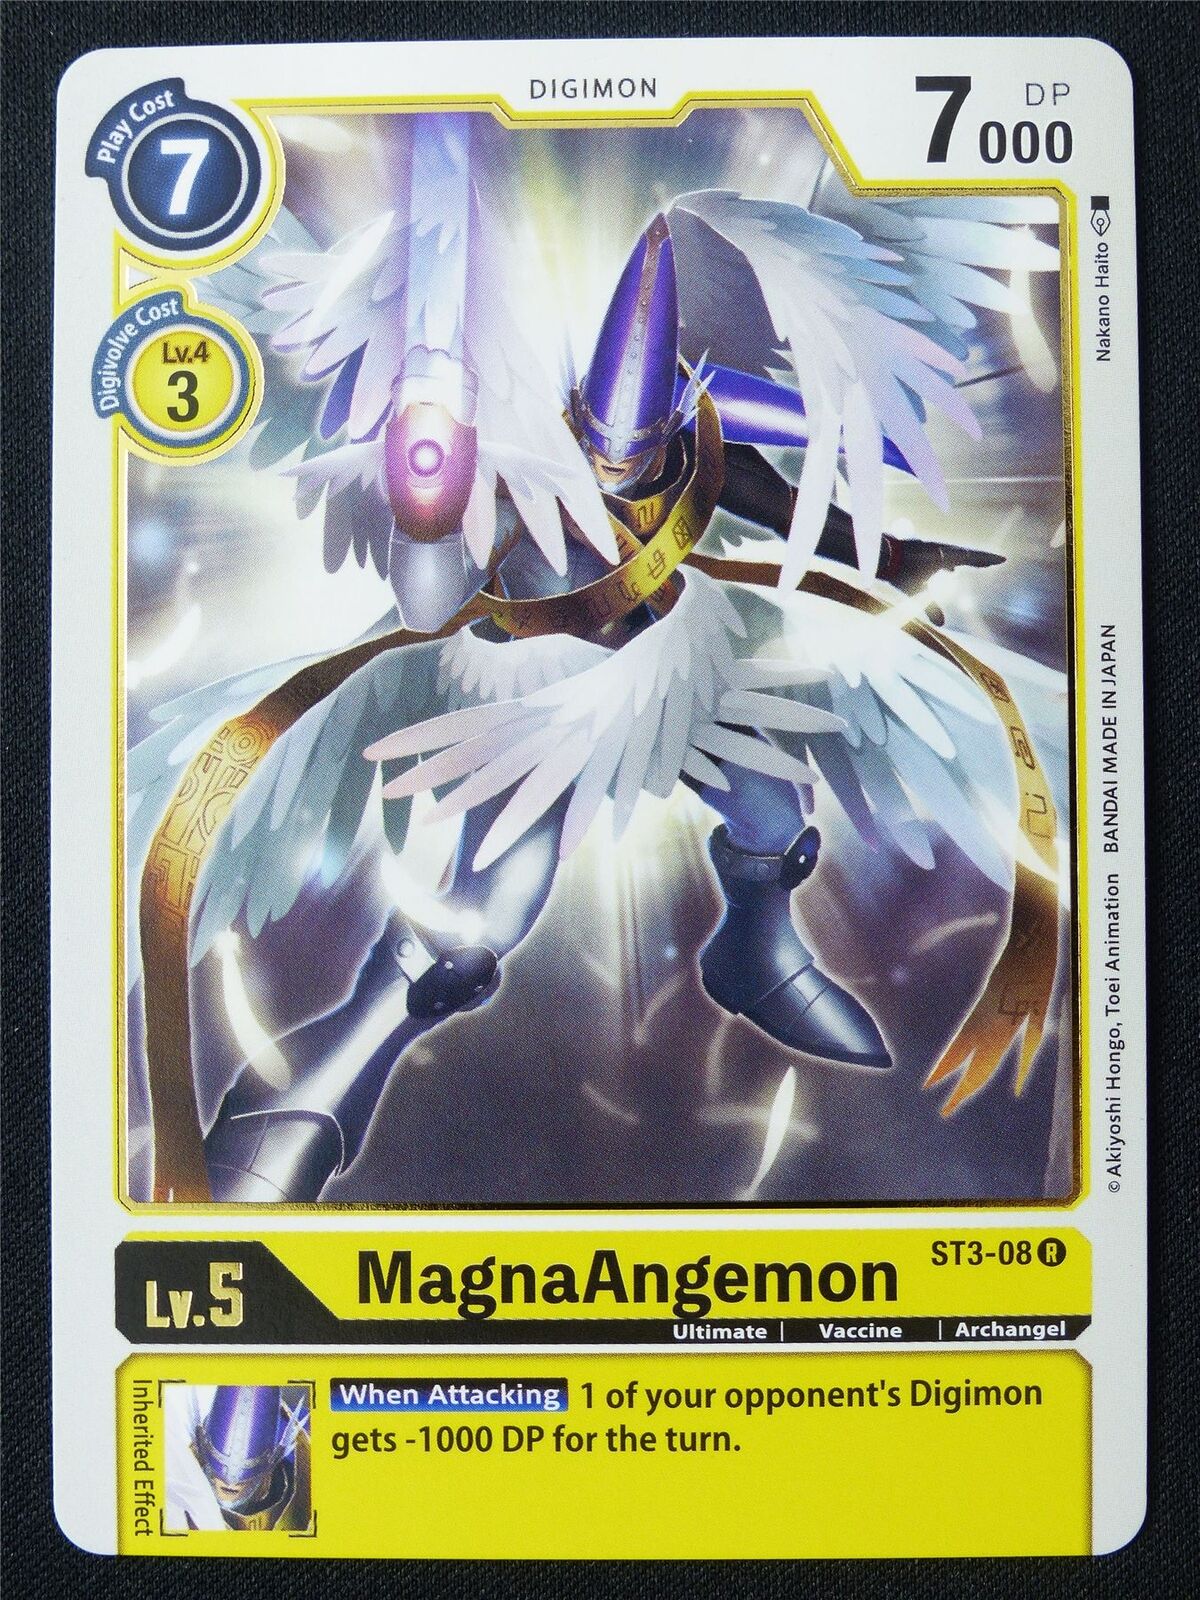 magnaAngemon ST3-08 R - Digimon Card #17P